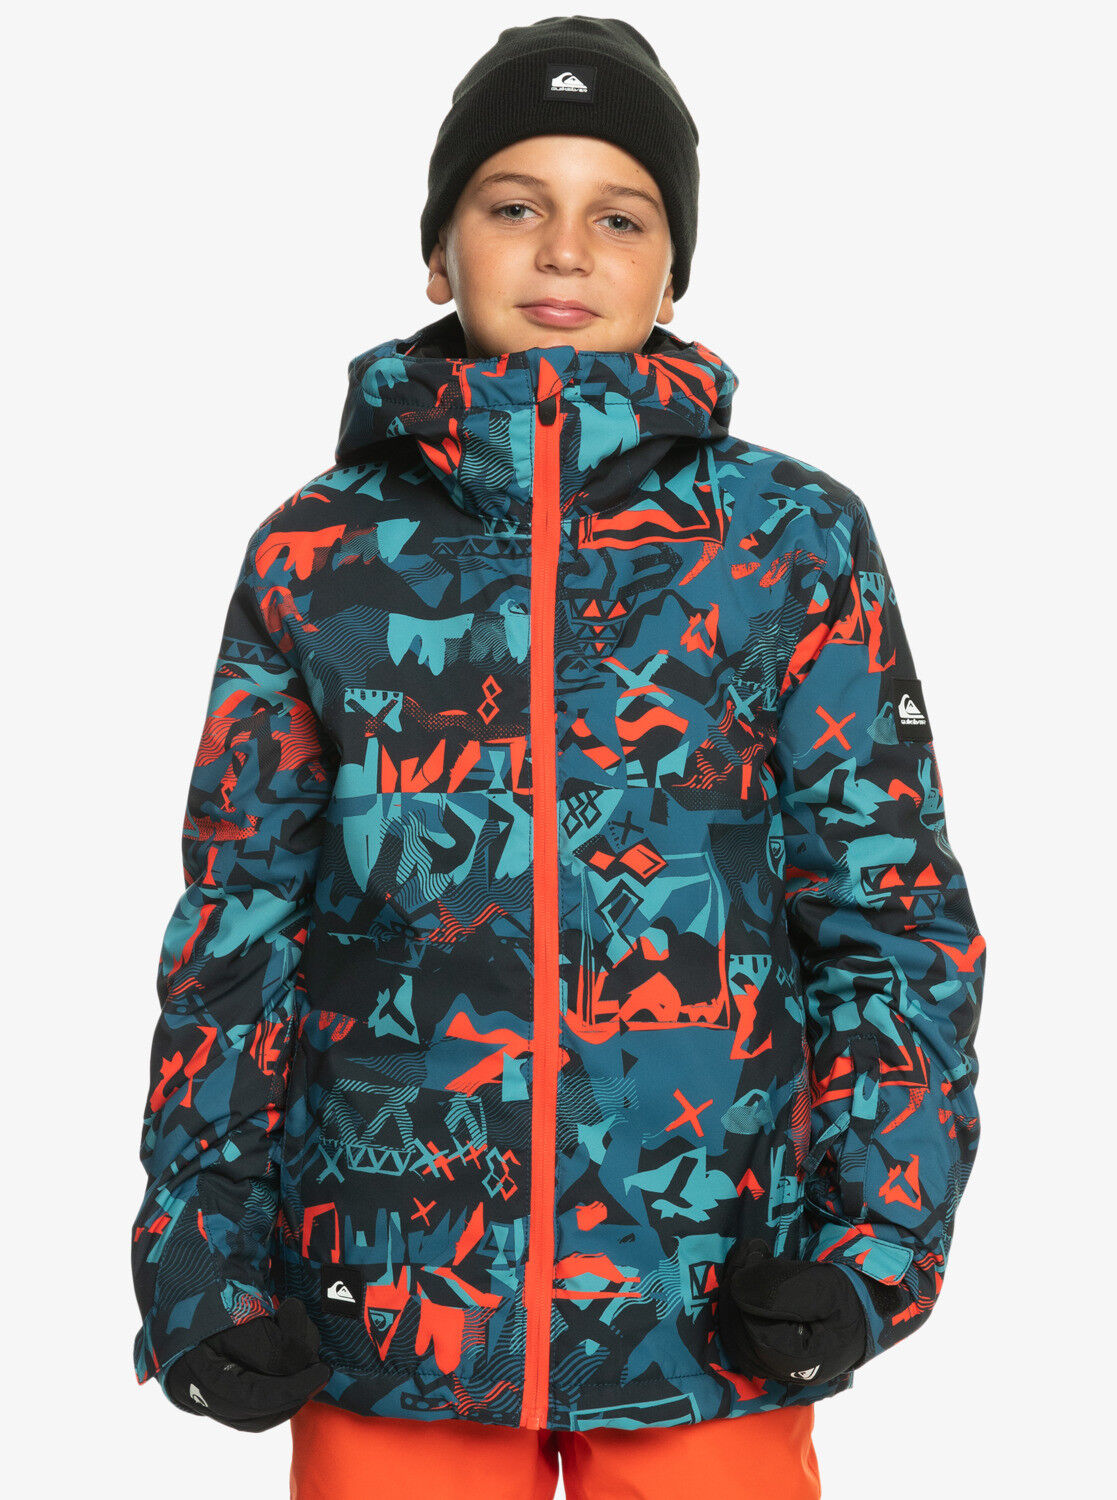 Quiksilver Mission Printed Youth Jacket - Kurtka narciarska dziecięca | Hardloop